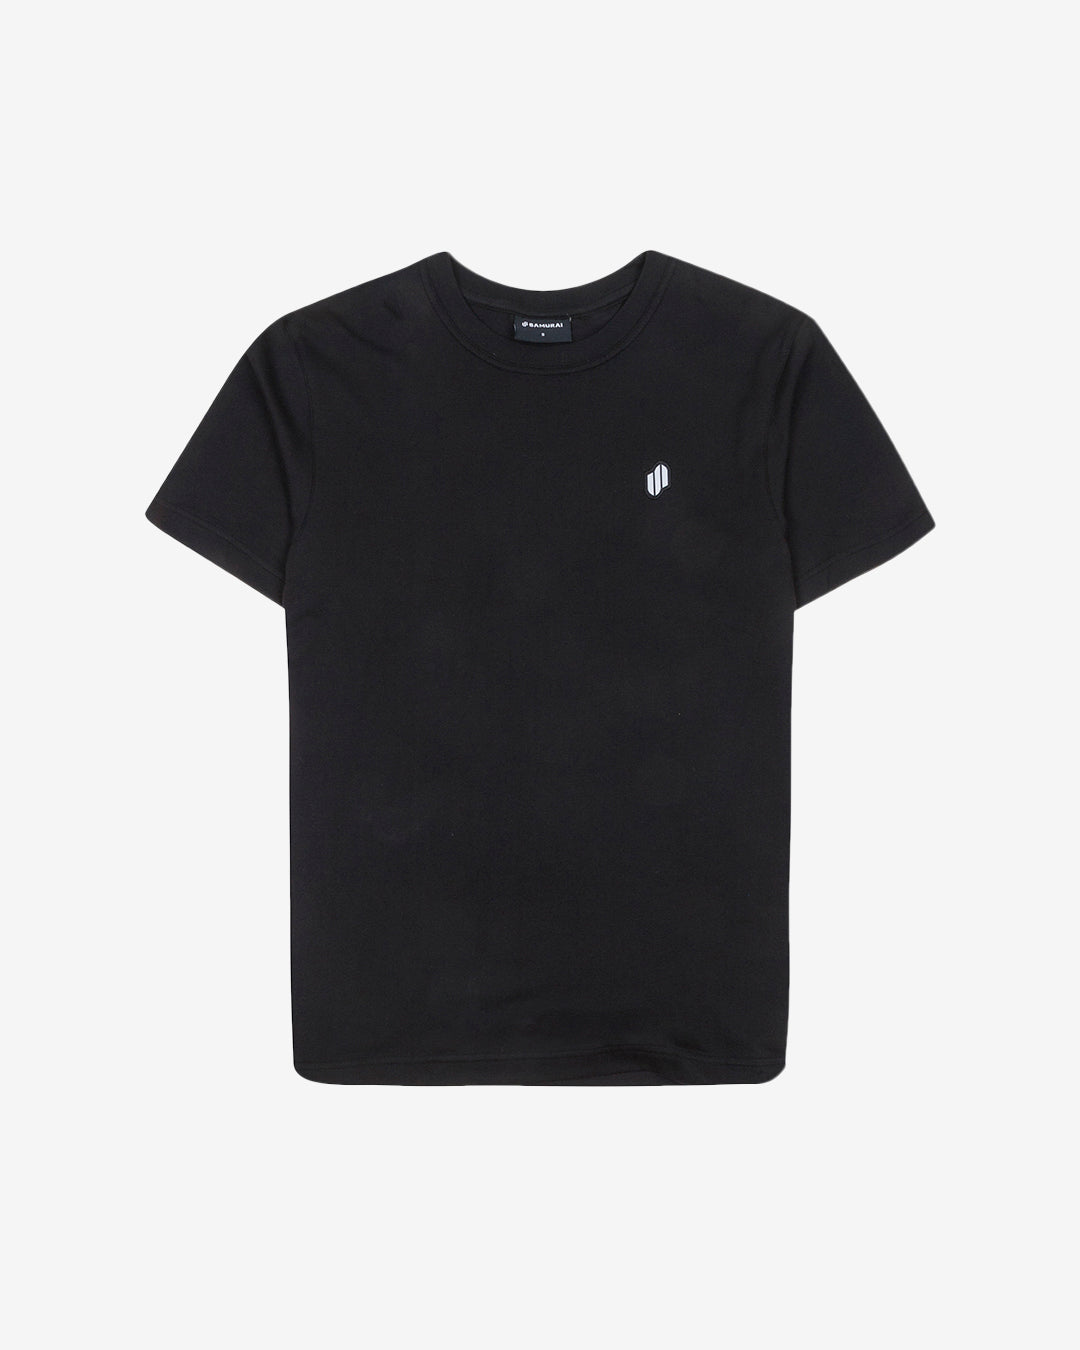 PFC: 002-1 - Men's T-Shirt - Onyx Black